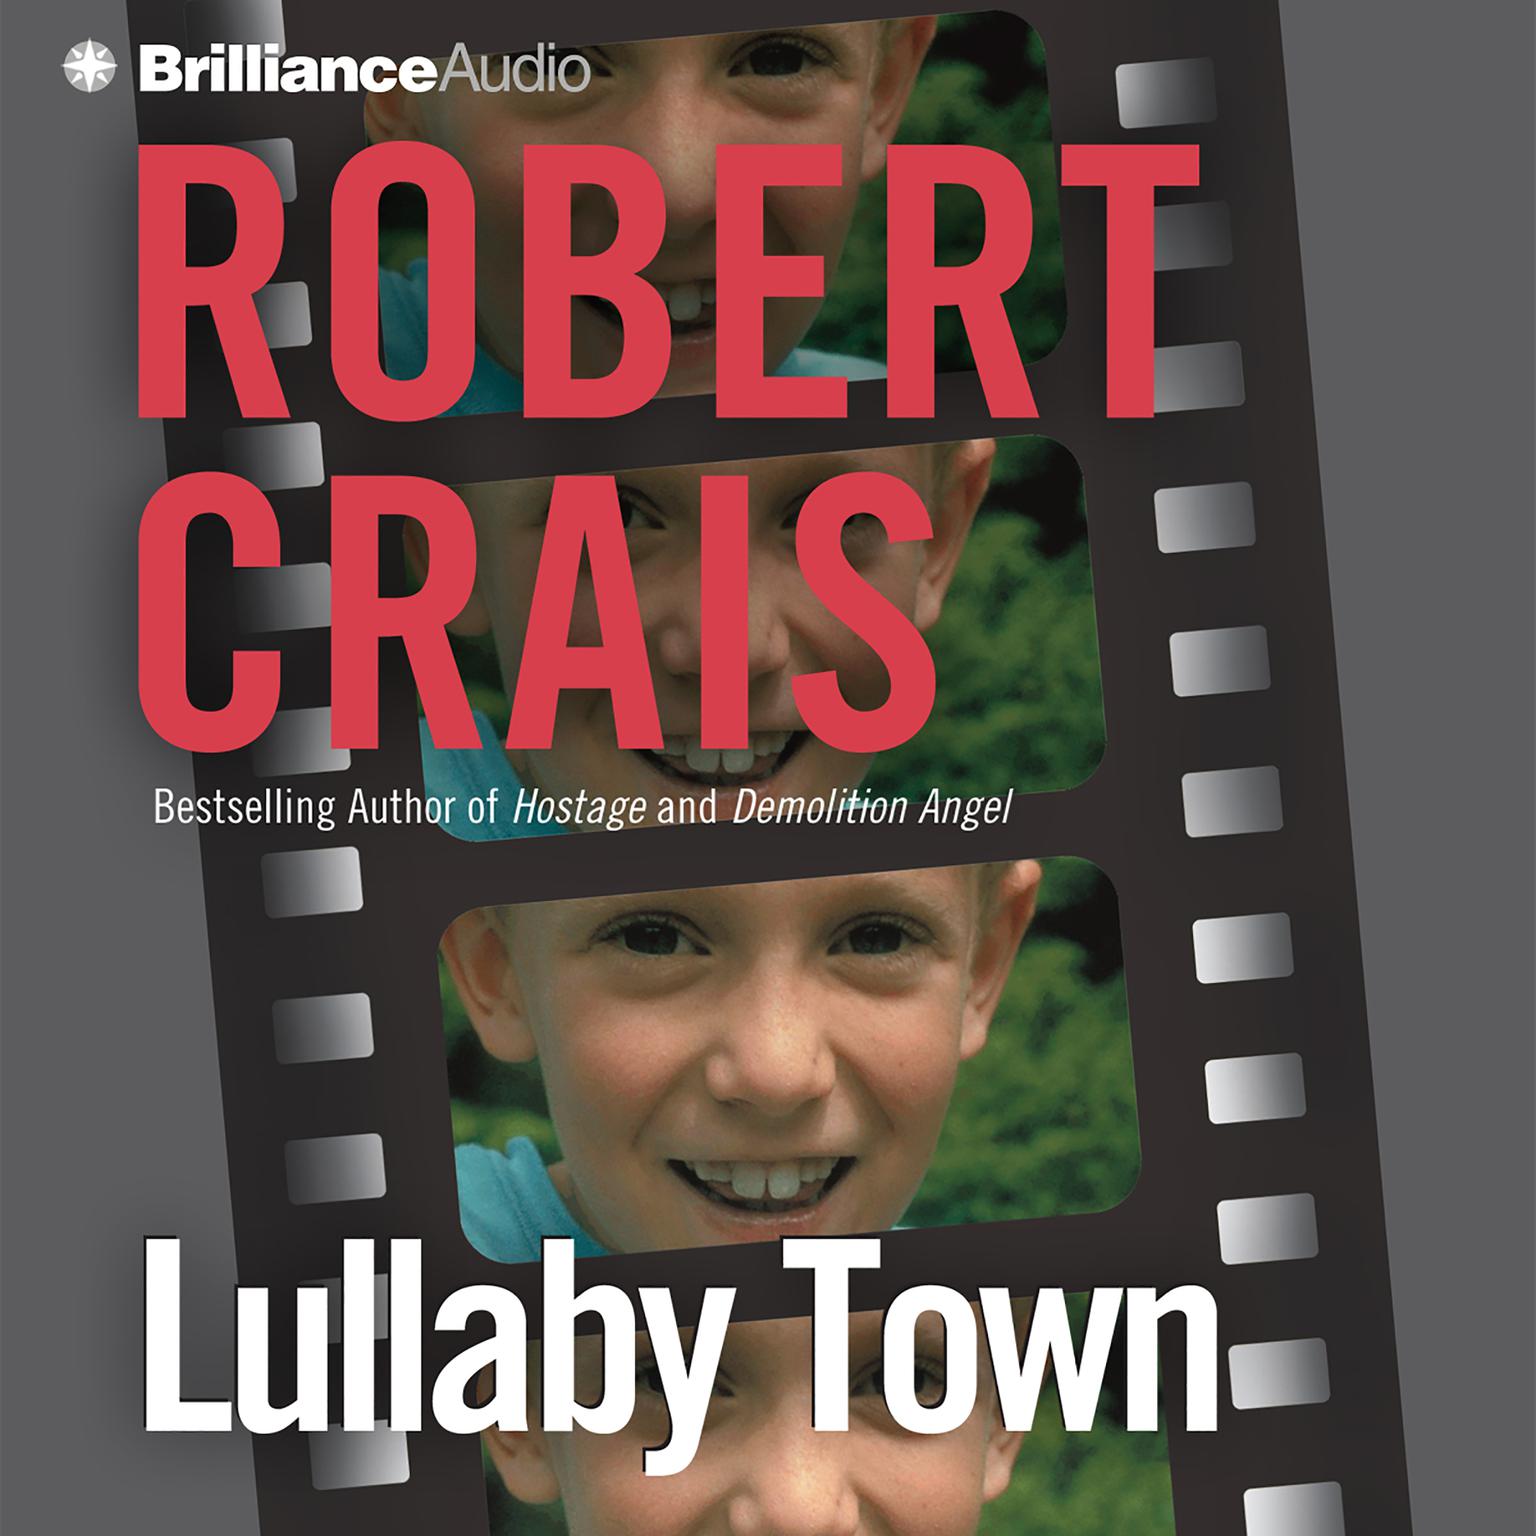 Lullaby Town (Abridged) Audiobook, by Robert Crais